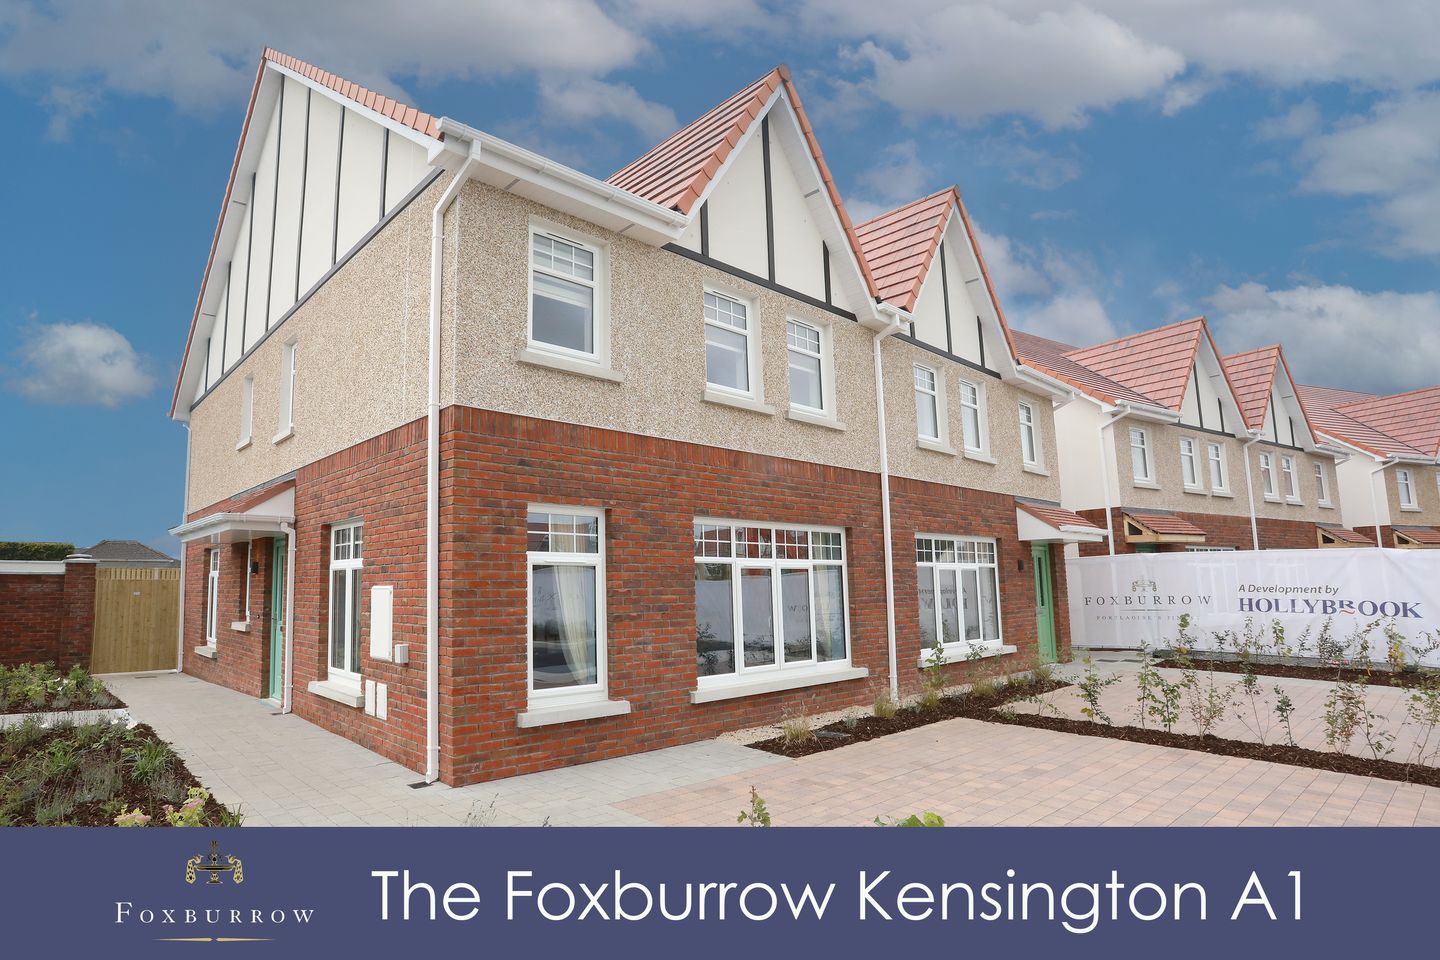 The Foxburrow Kensington A1, Foxburrow, Foxburrow, Stradbally Road, Portlaoise, Co. Laois